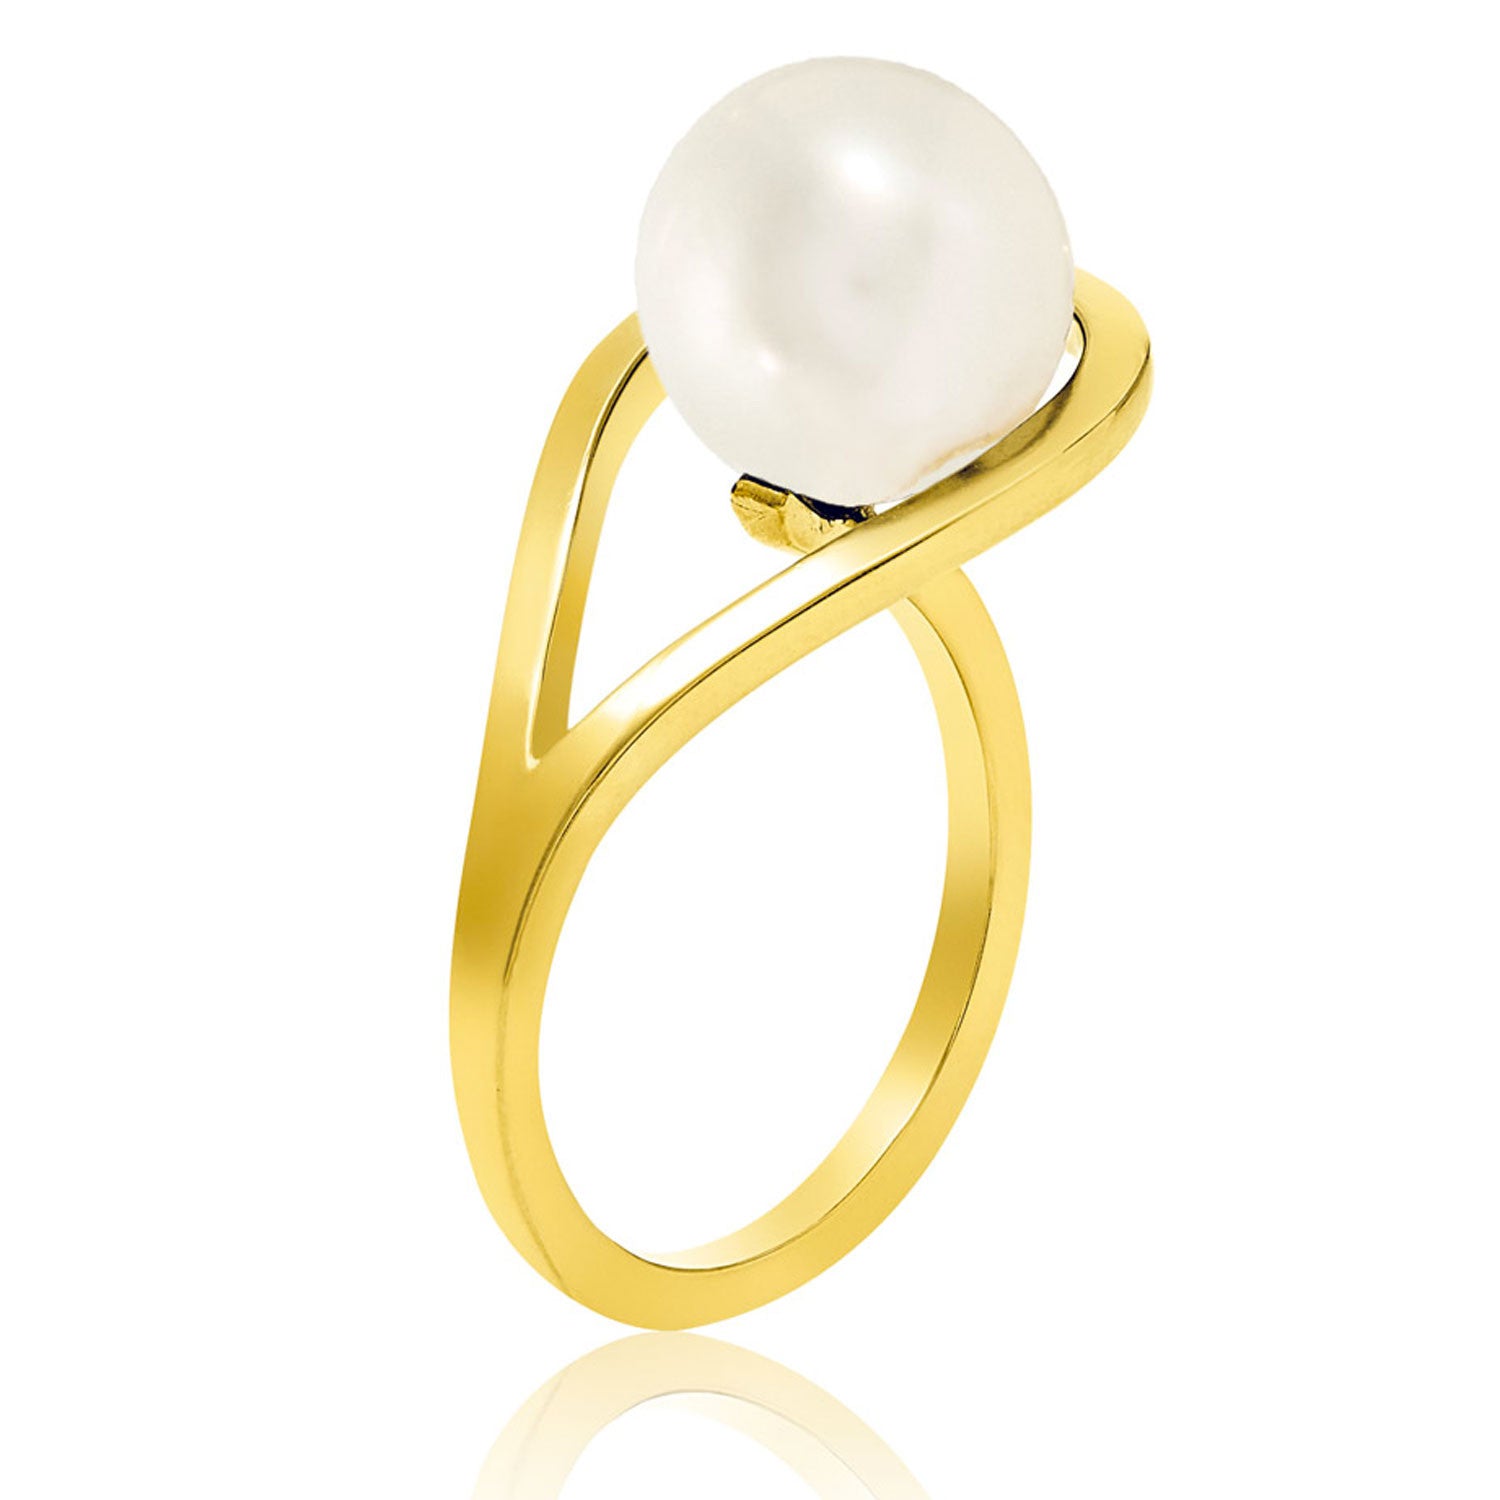 Gold Vermeil ring, white freshwater pearl, geometric, unique British design